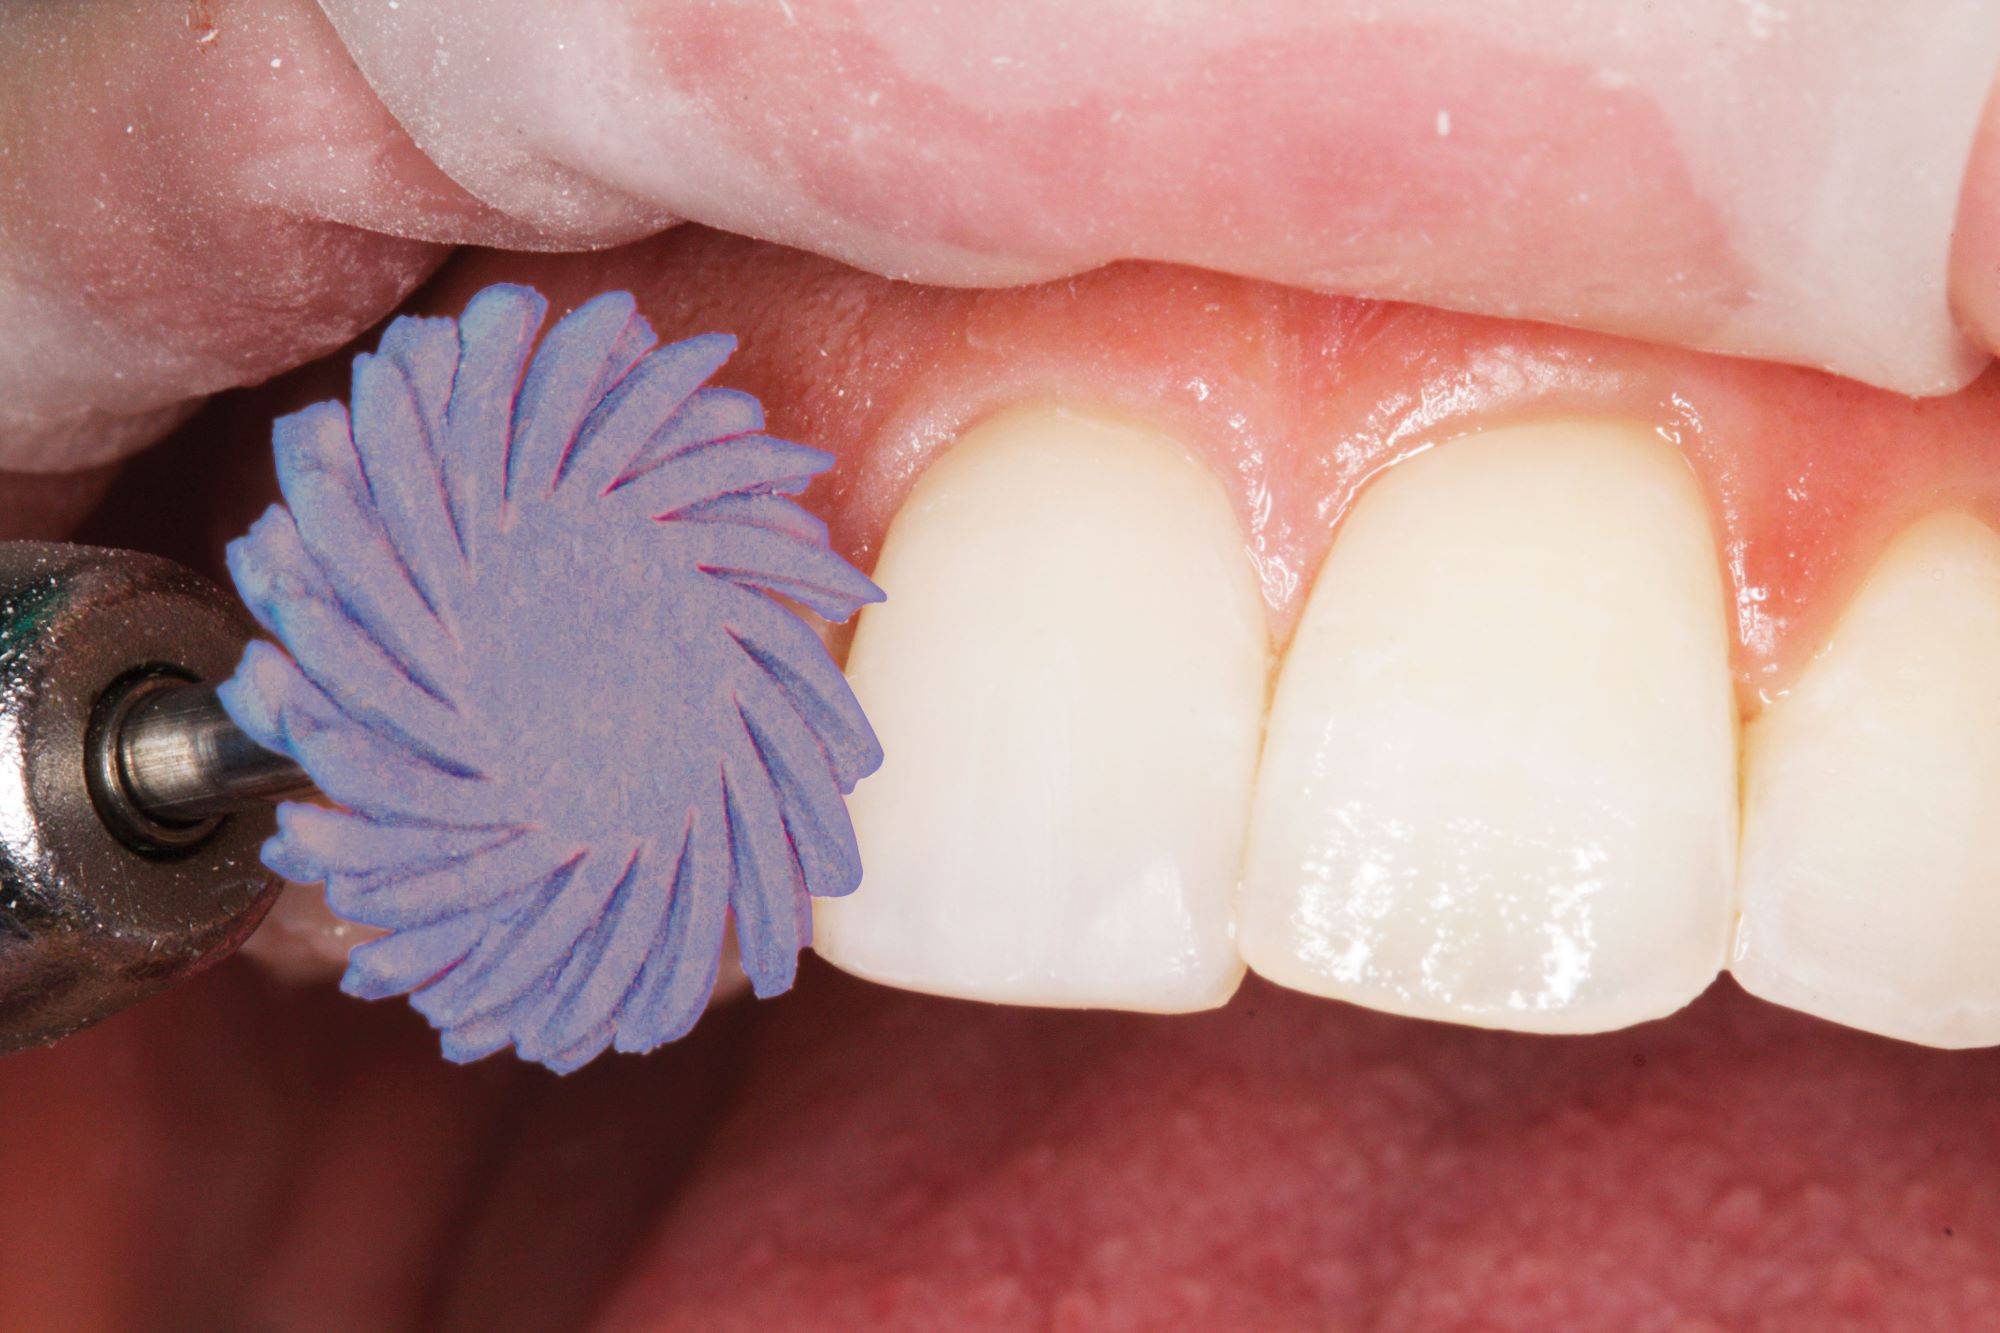 purple polisher touching upper incisor